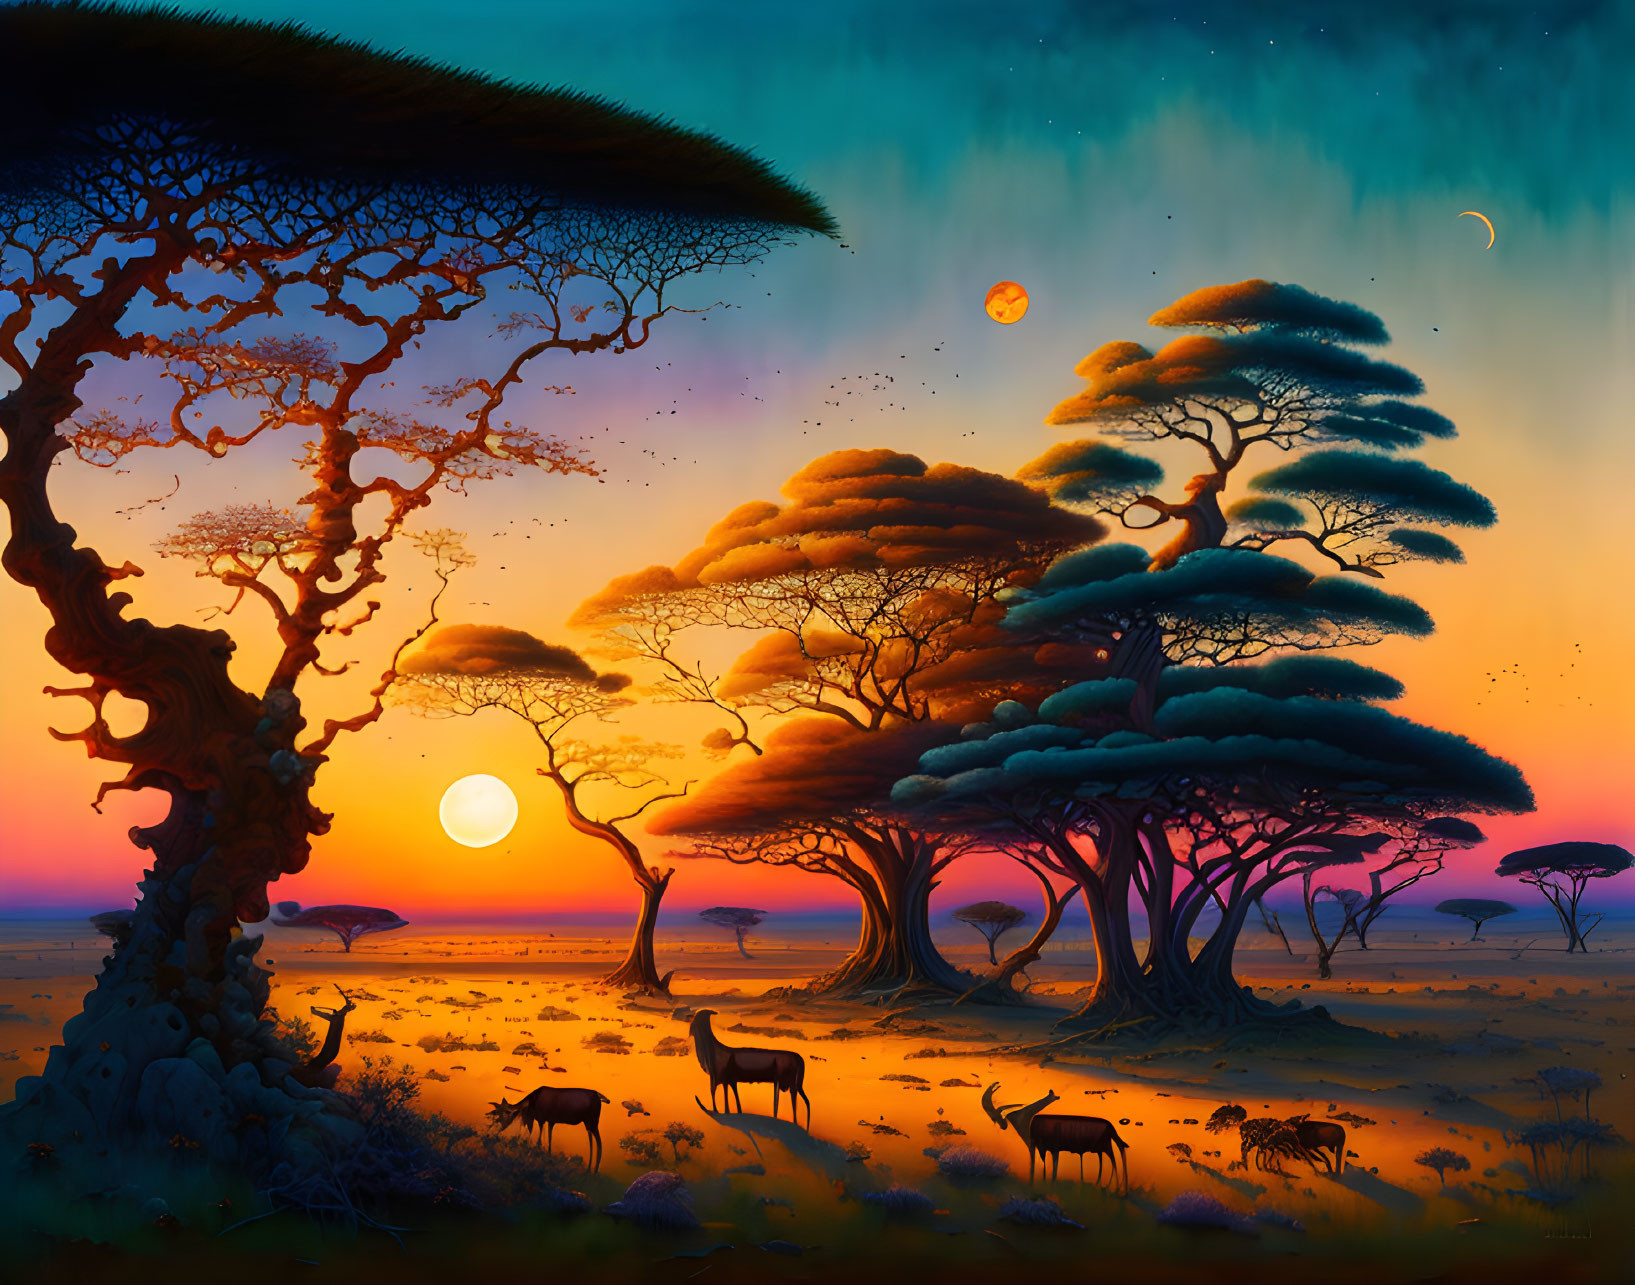 African savanna twilight scene with acacia tree, wildebeest herd, and surreal sky